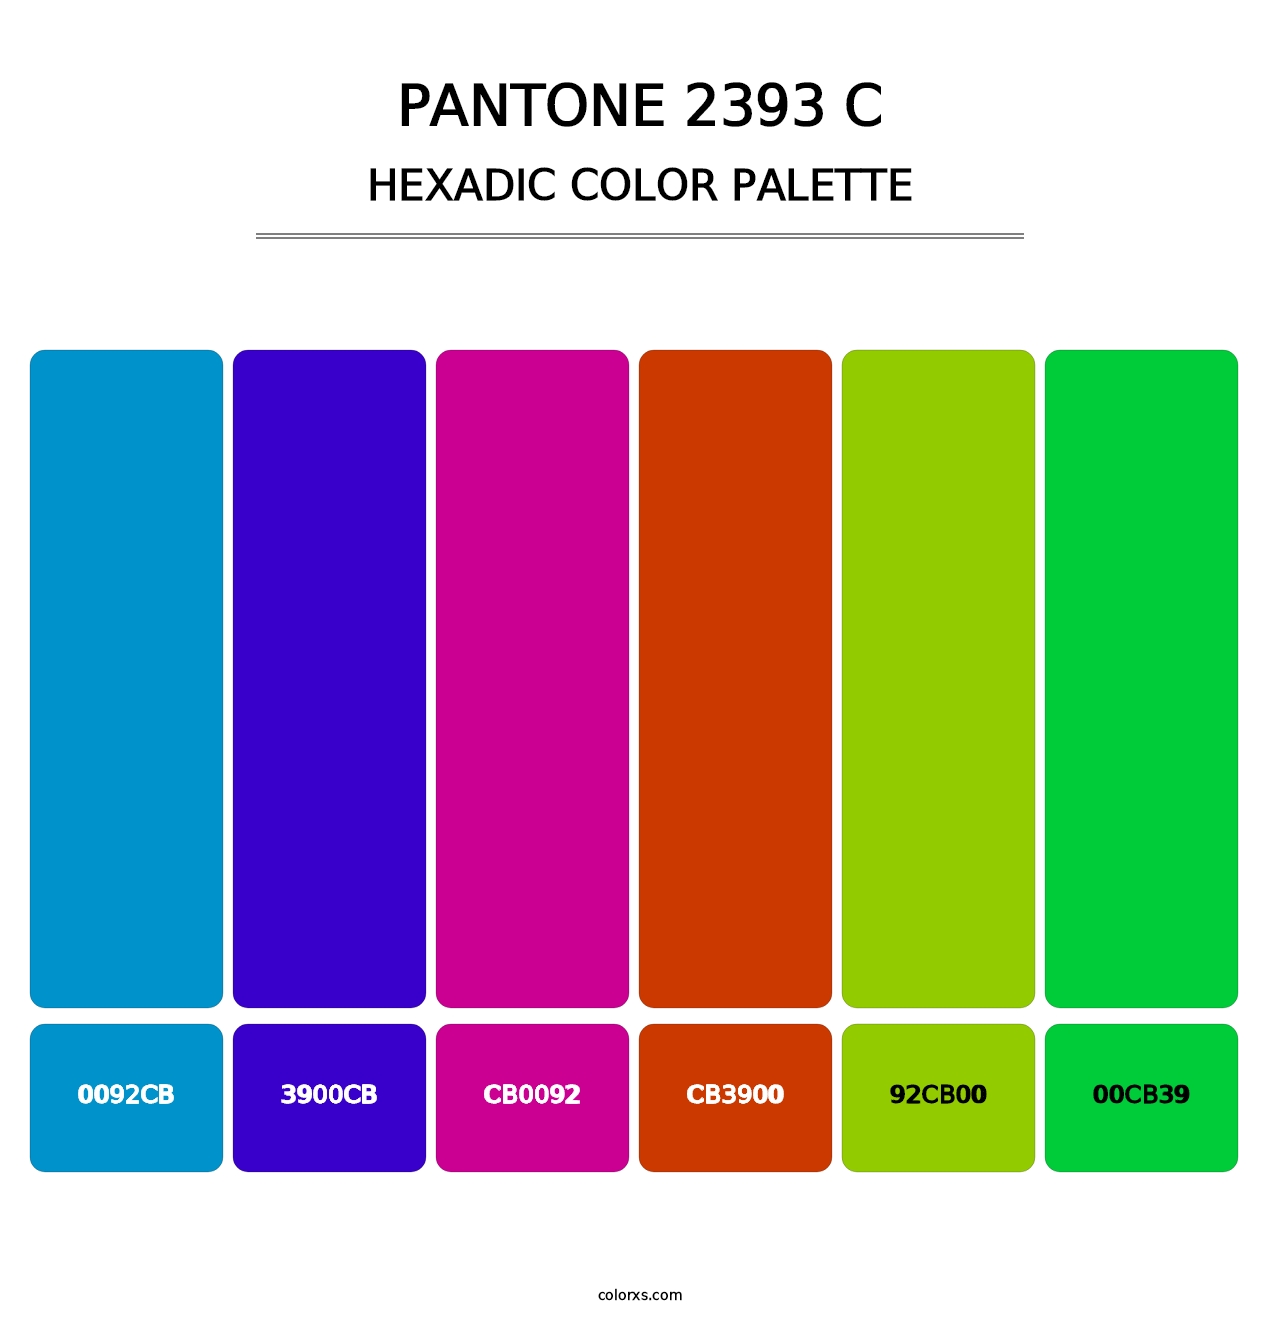 PANTONE 2393 C - Hexadic Color Palette